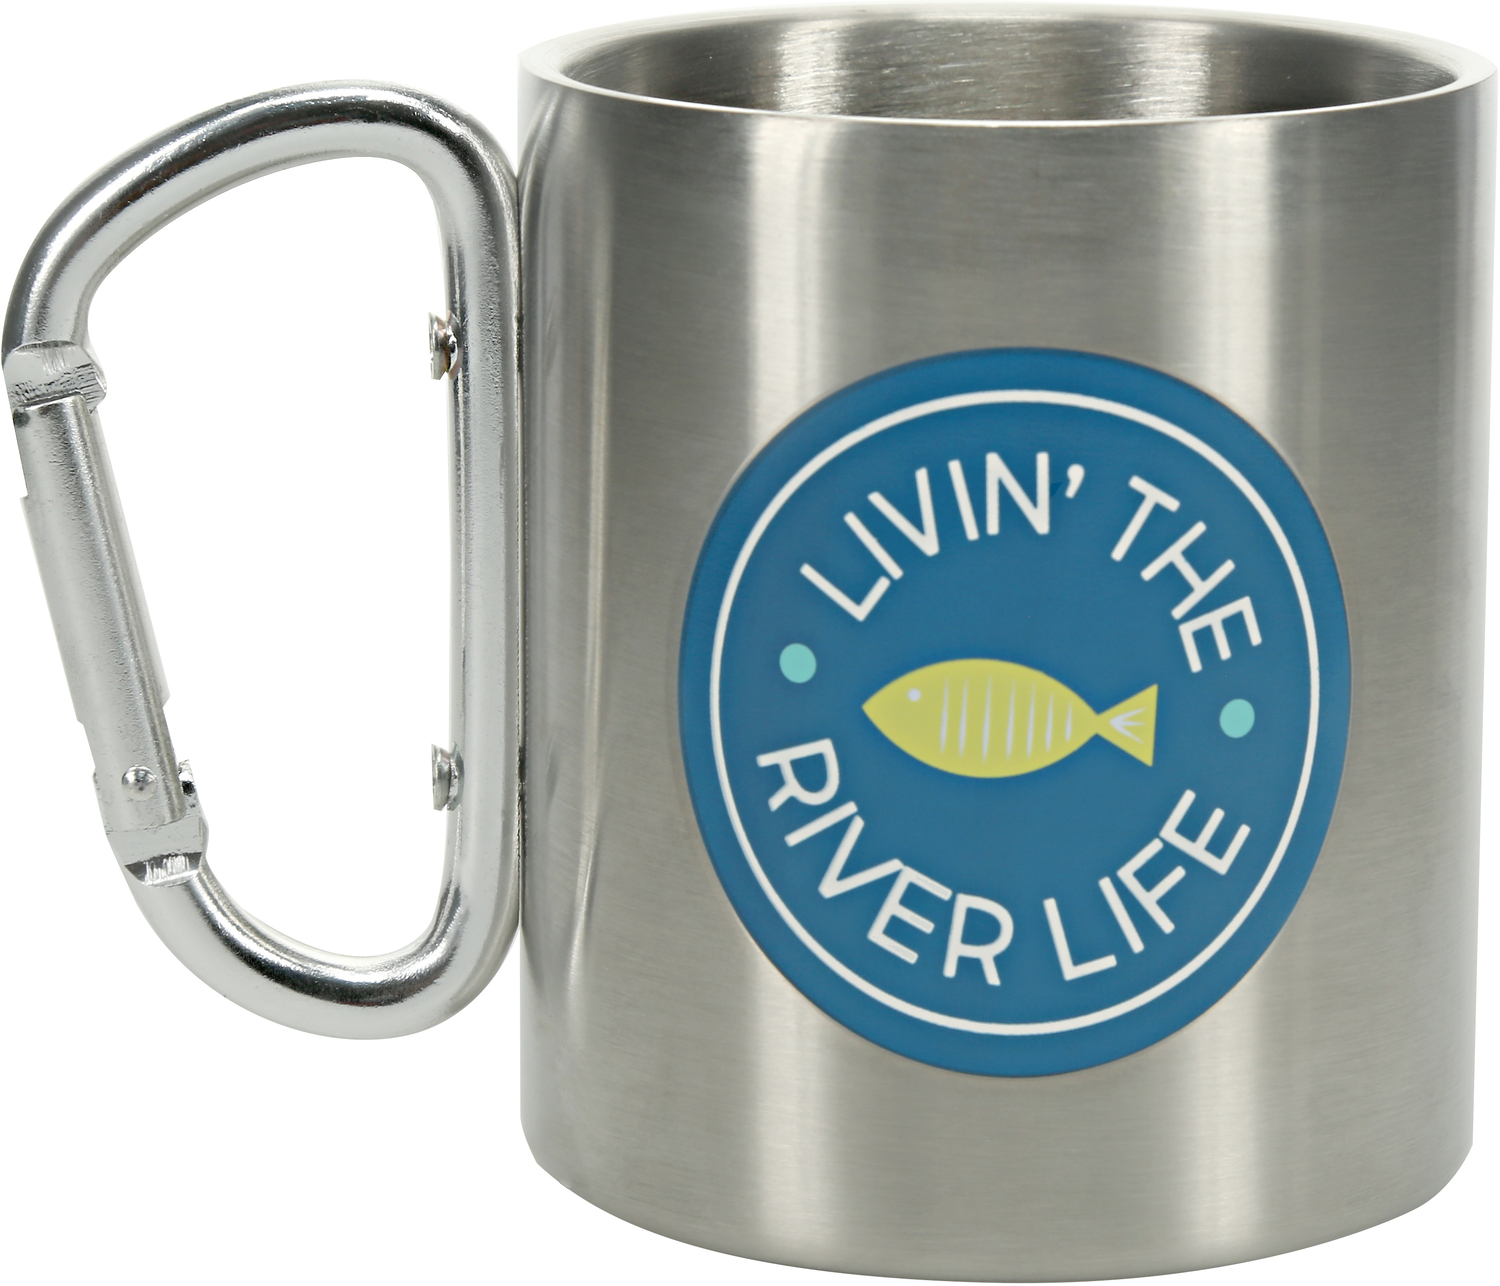 River by We People - River - 10 oz Stainless Steel Carabiner Mug